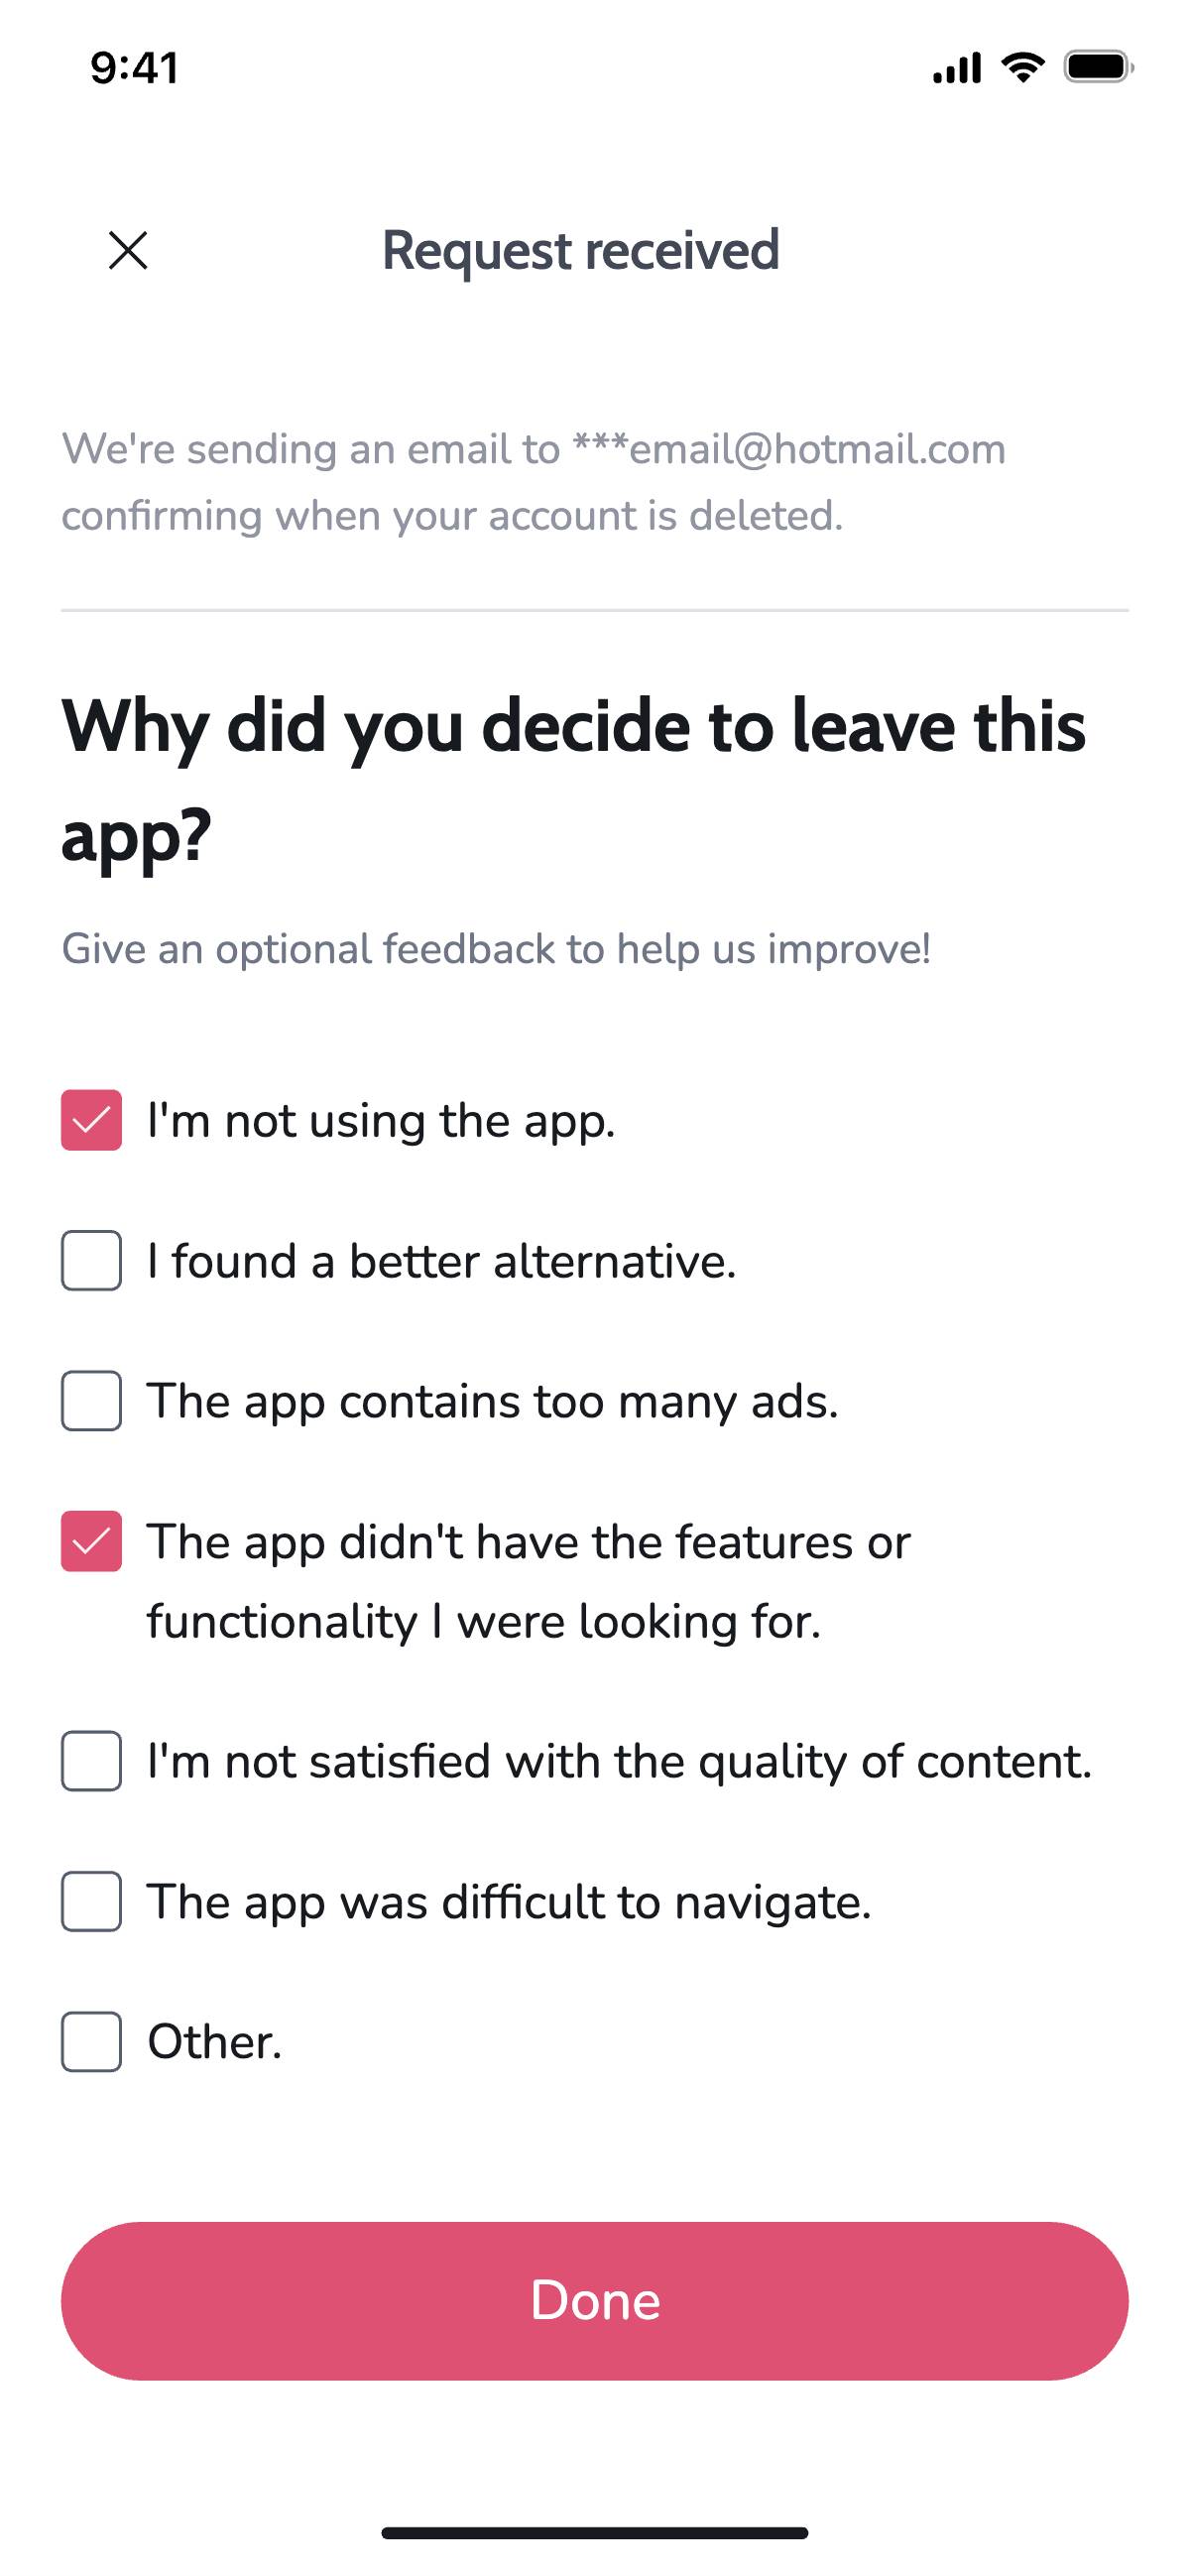 Delete account - Survey